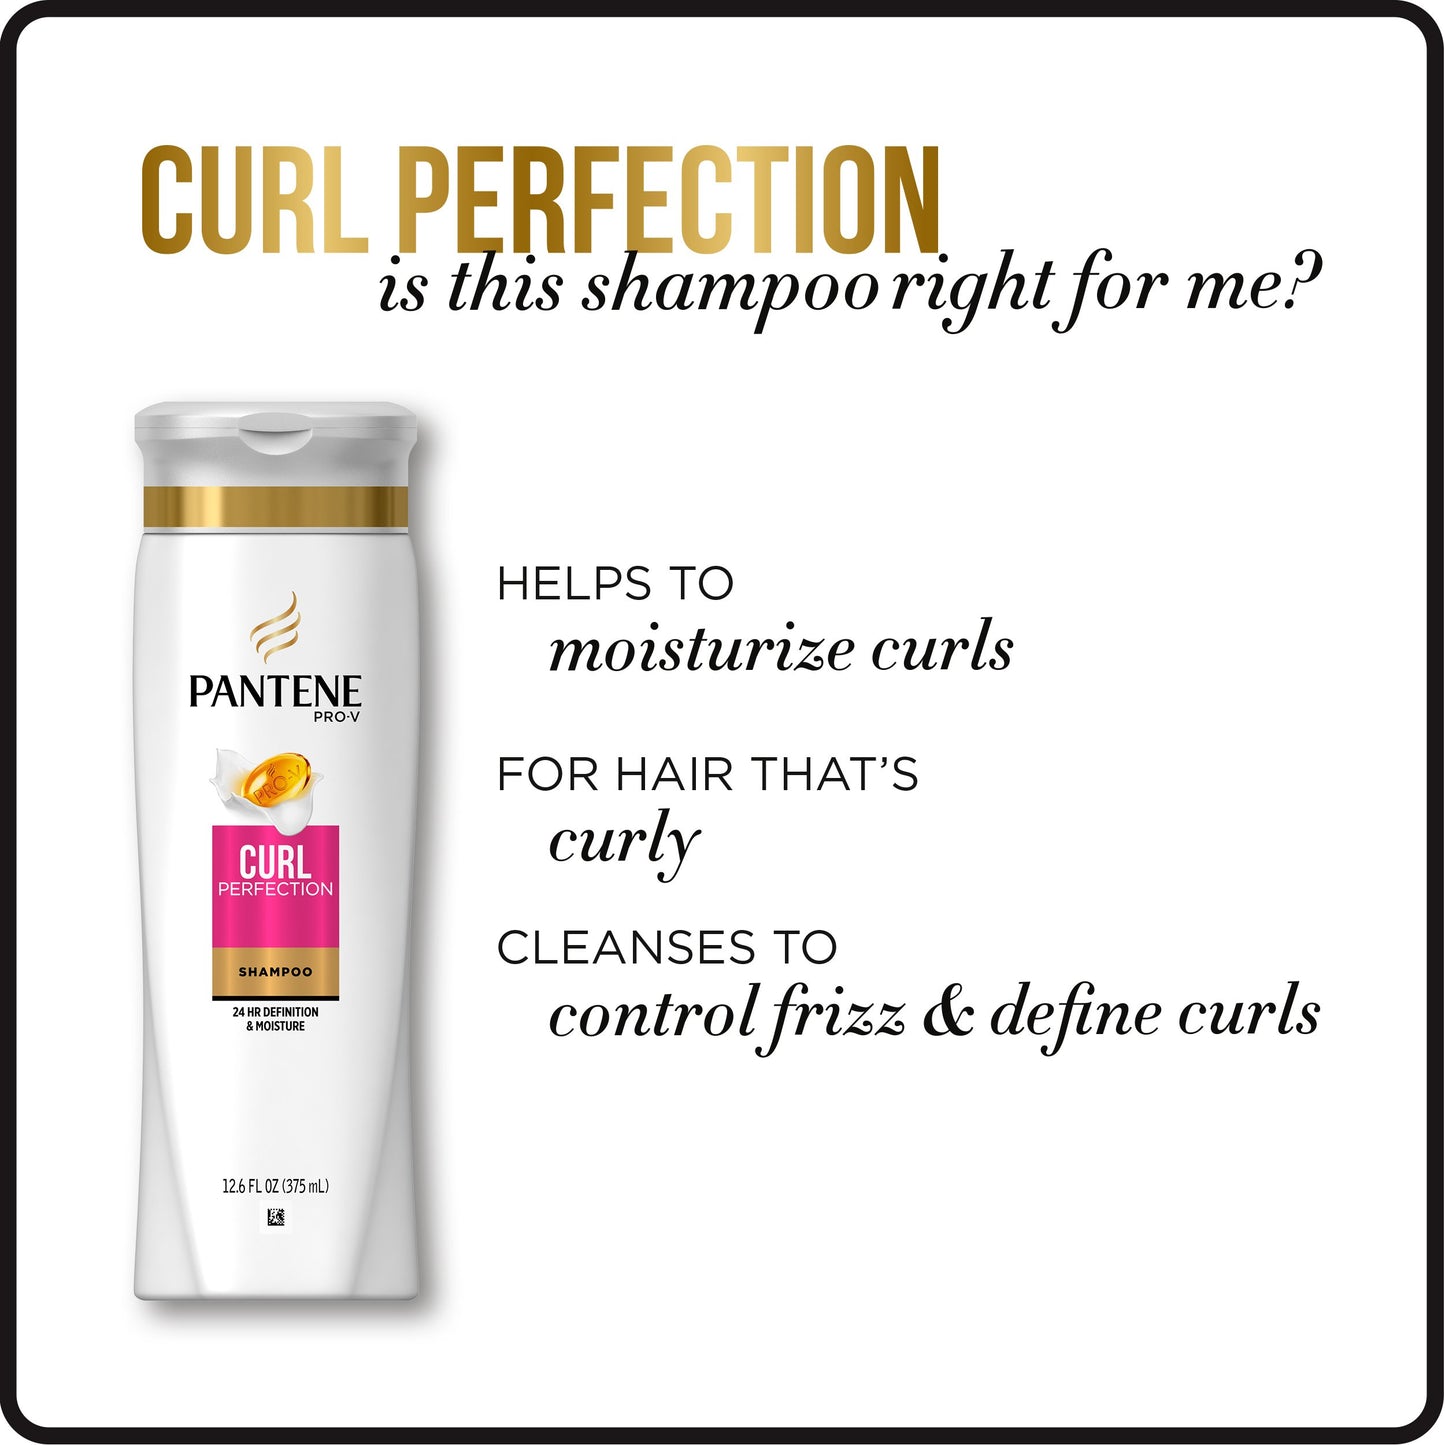 Pantene Pro-V Curl Perfection Shampoo, 20.1 Fl Oz, 20.100000000000001 Fl Oz